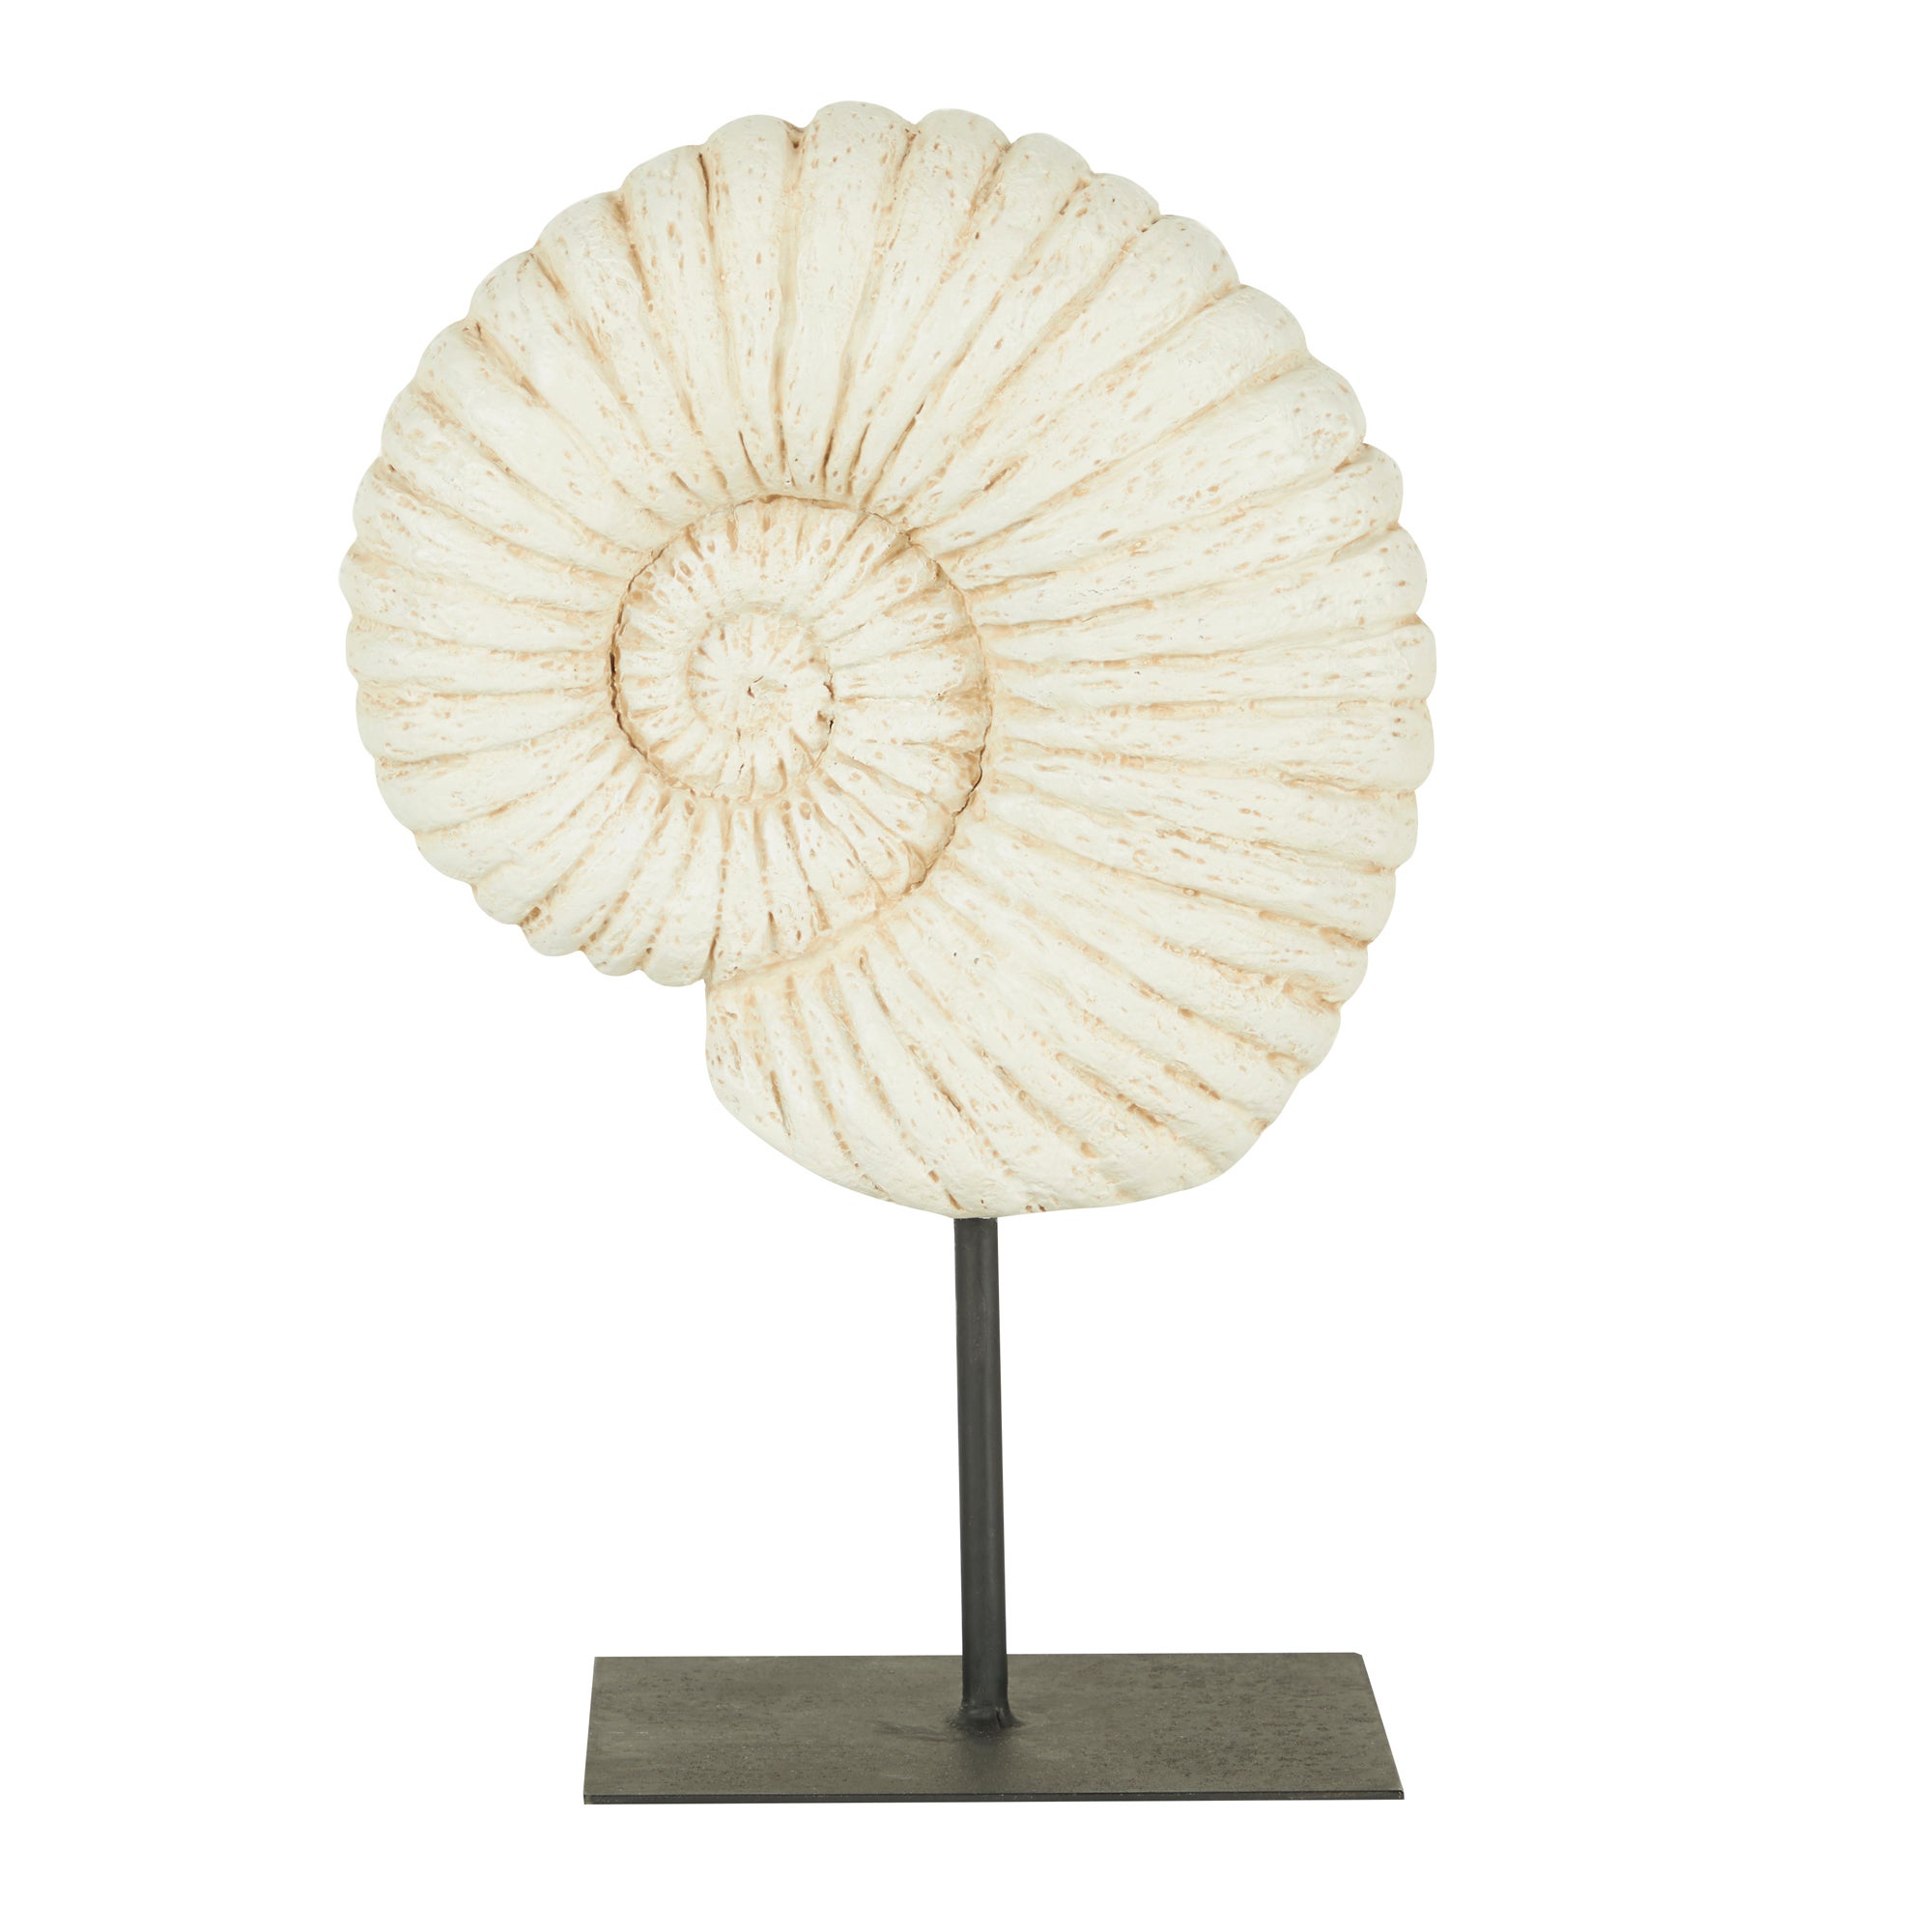 Fossil Shell on Stand Sculpture | Dunelm